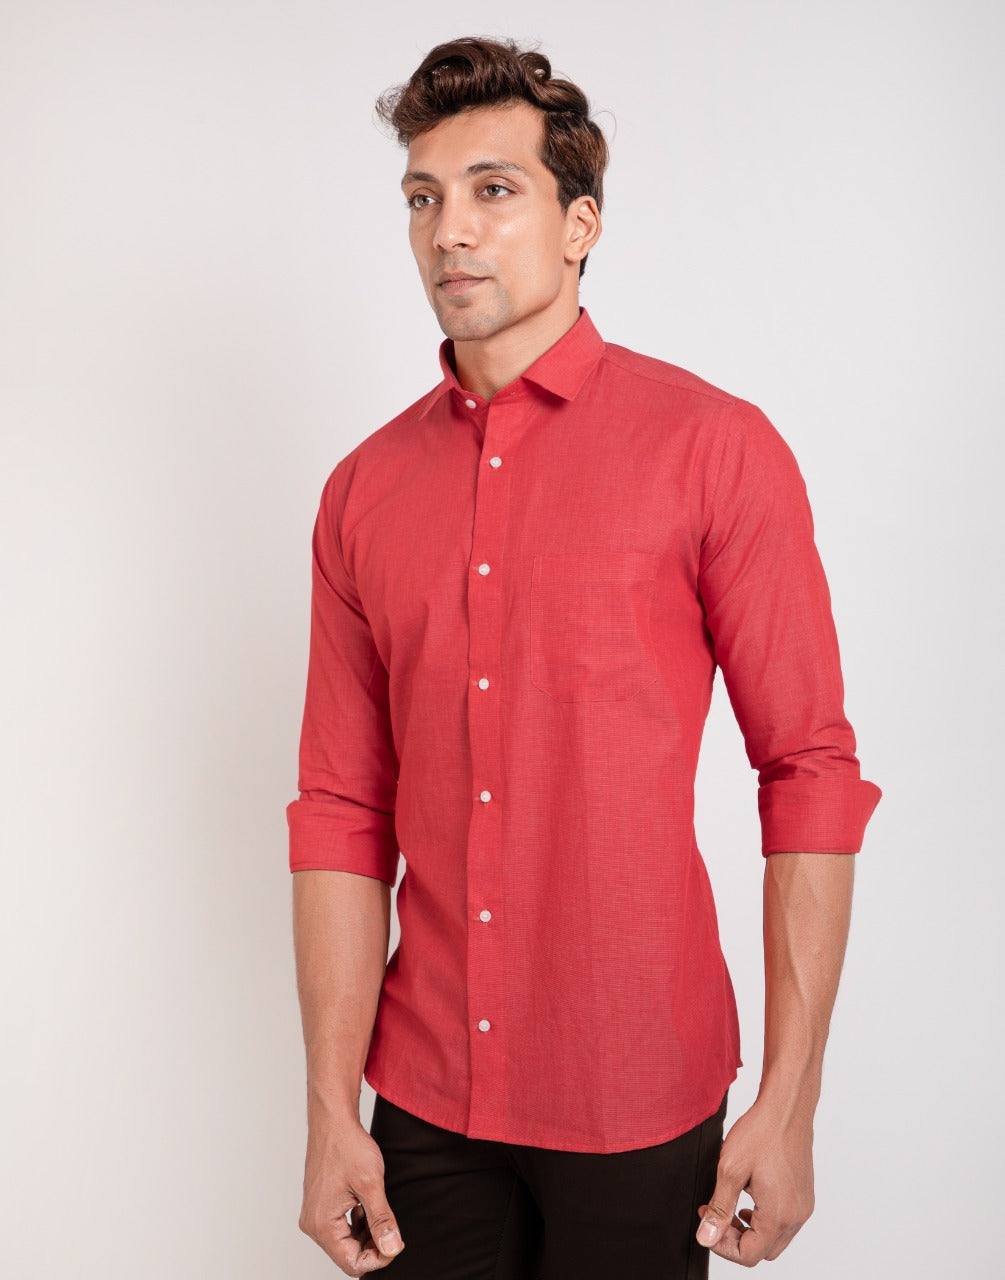 Red plain rich cotton shirt